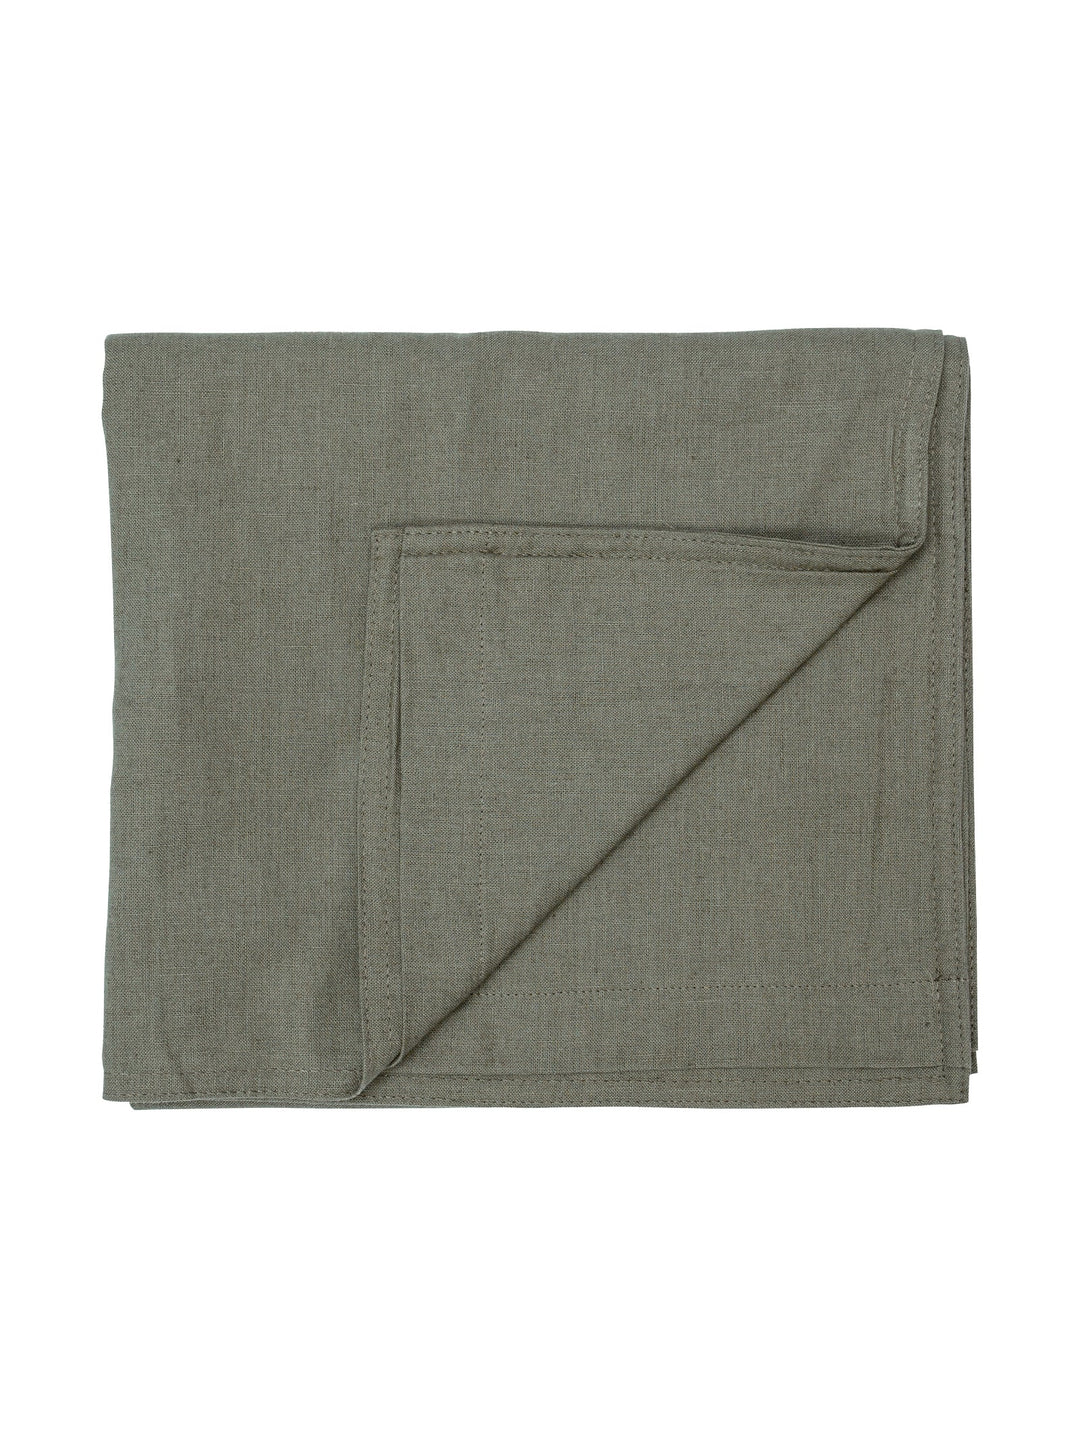 Bellisima Pillowcase Set of 2 - pillowcase- Hertex Haus Online - bed & bath